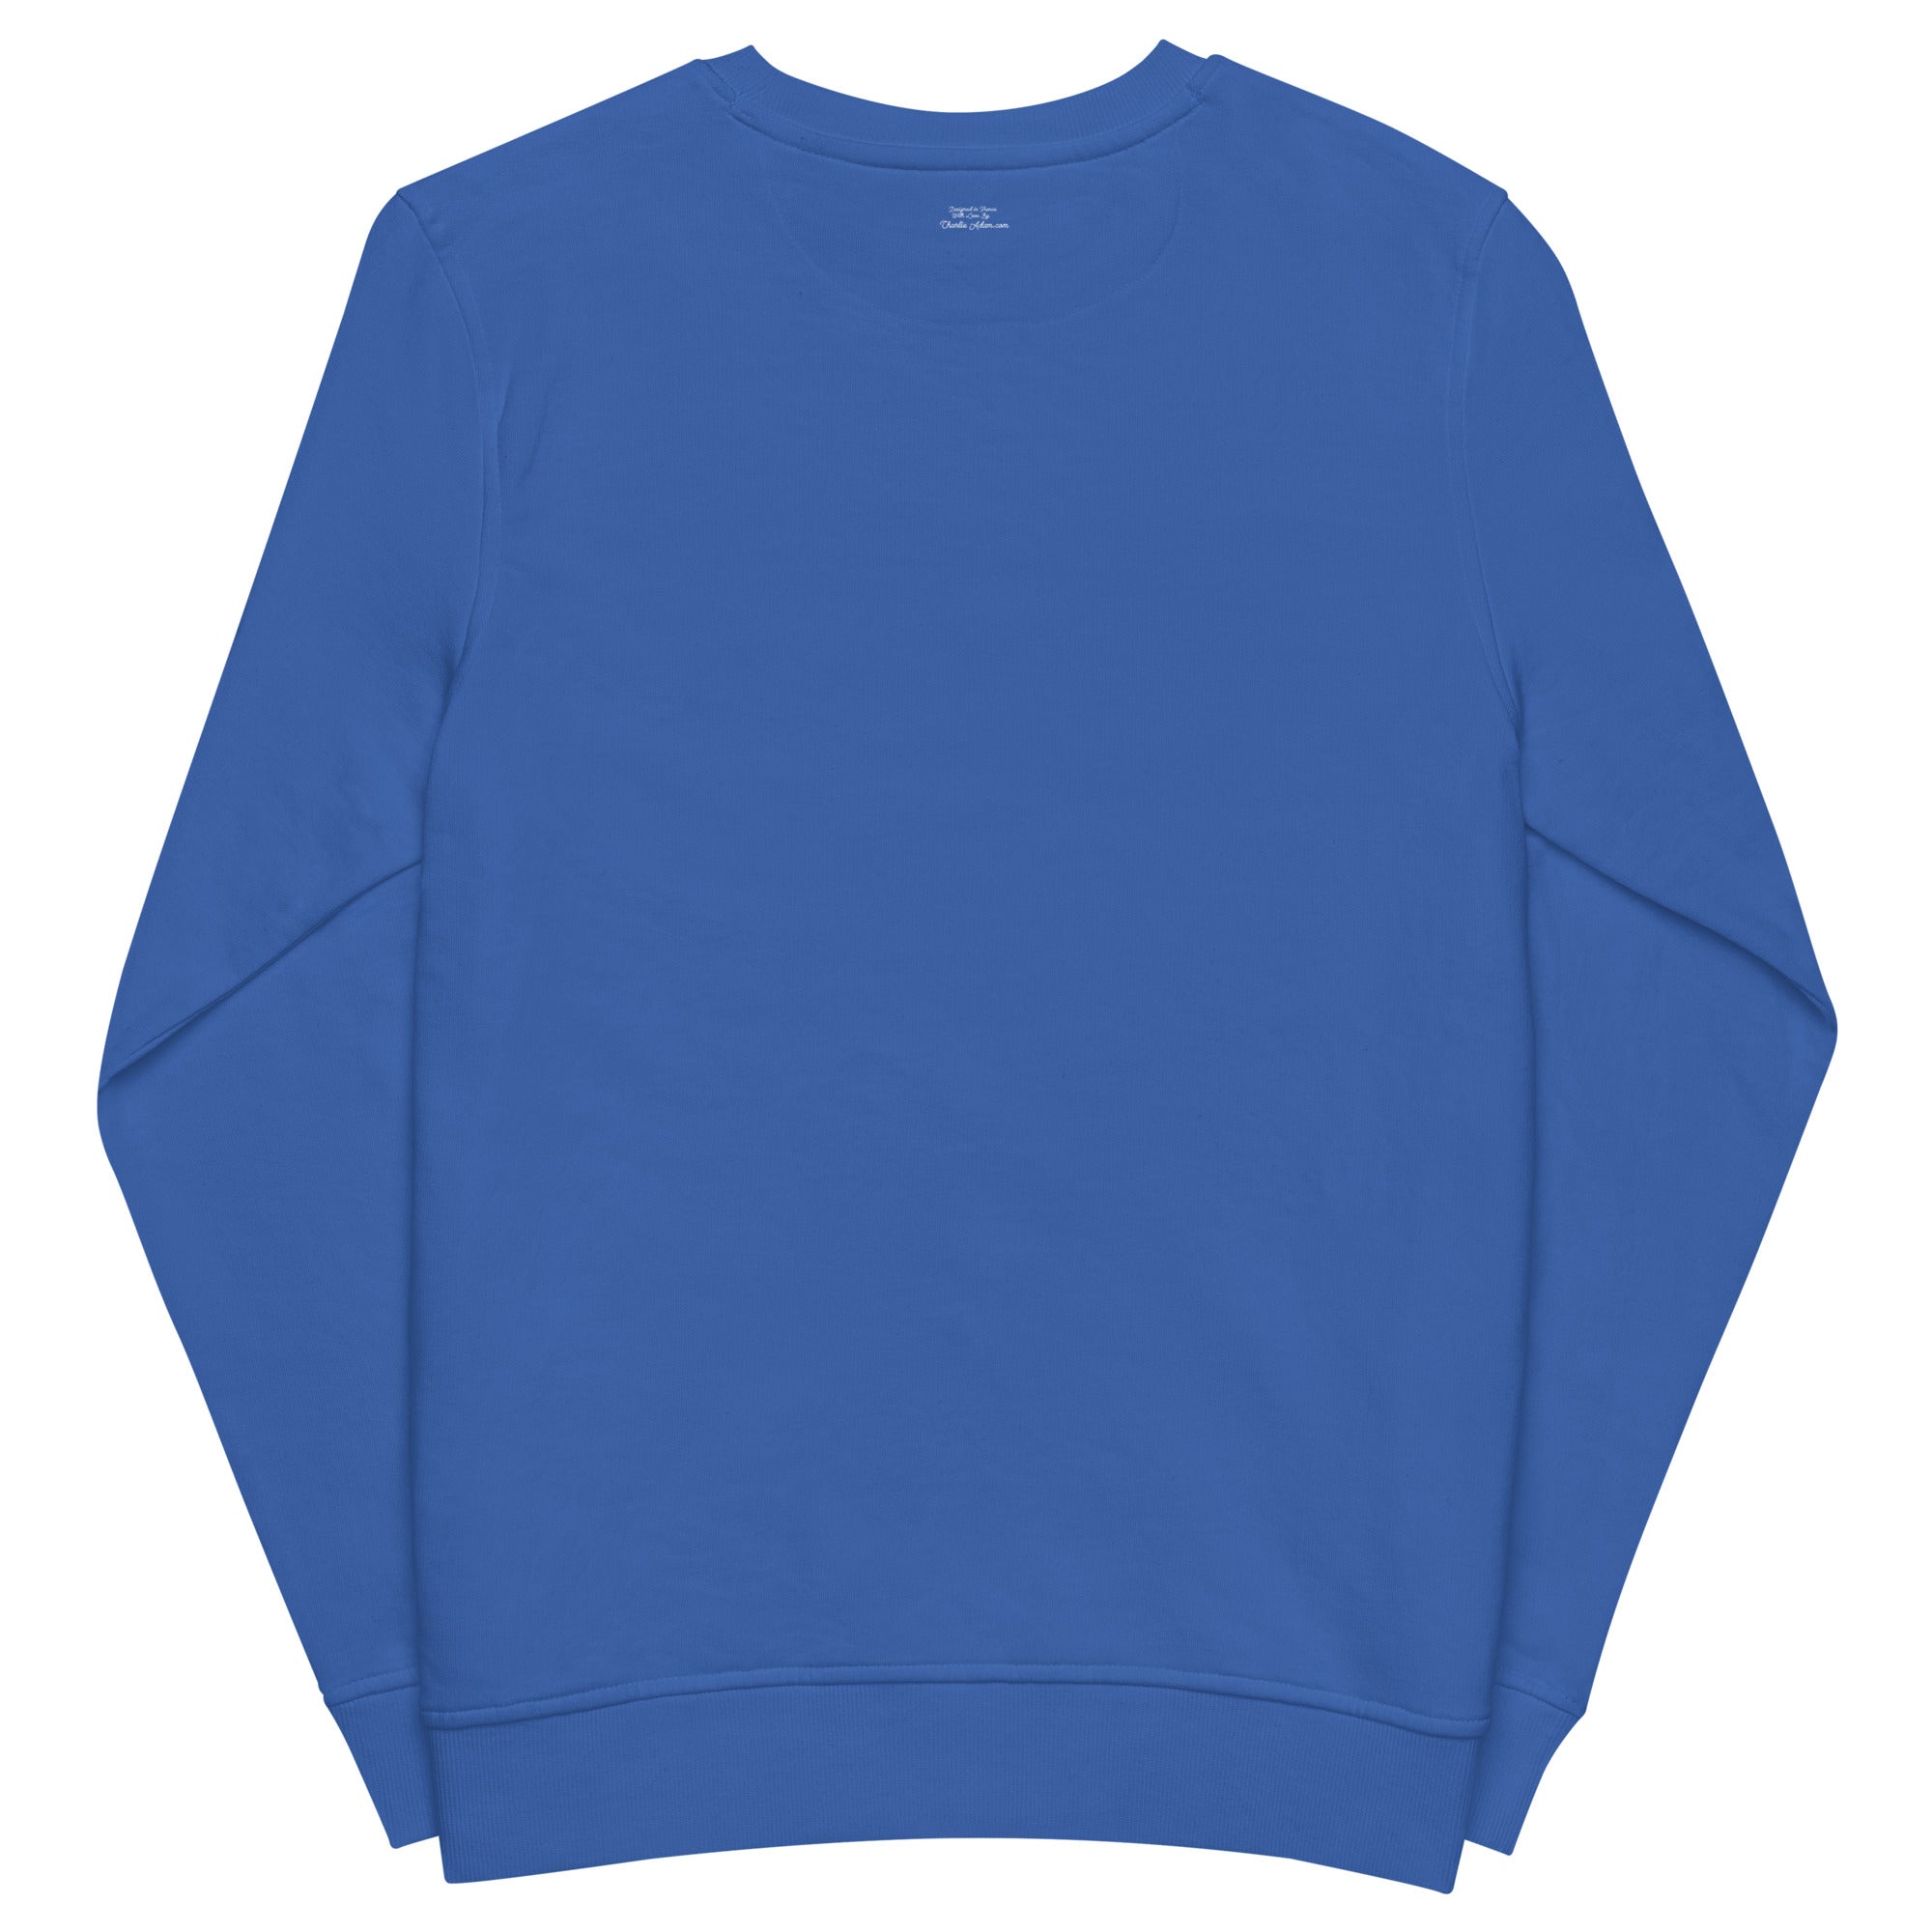 Unisex organic sweatshirt No Skiboots on Dancefloor light text